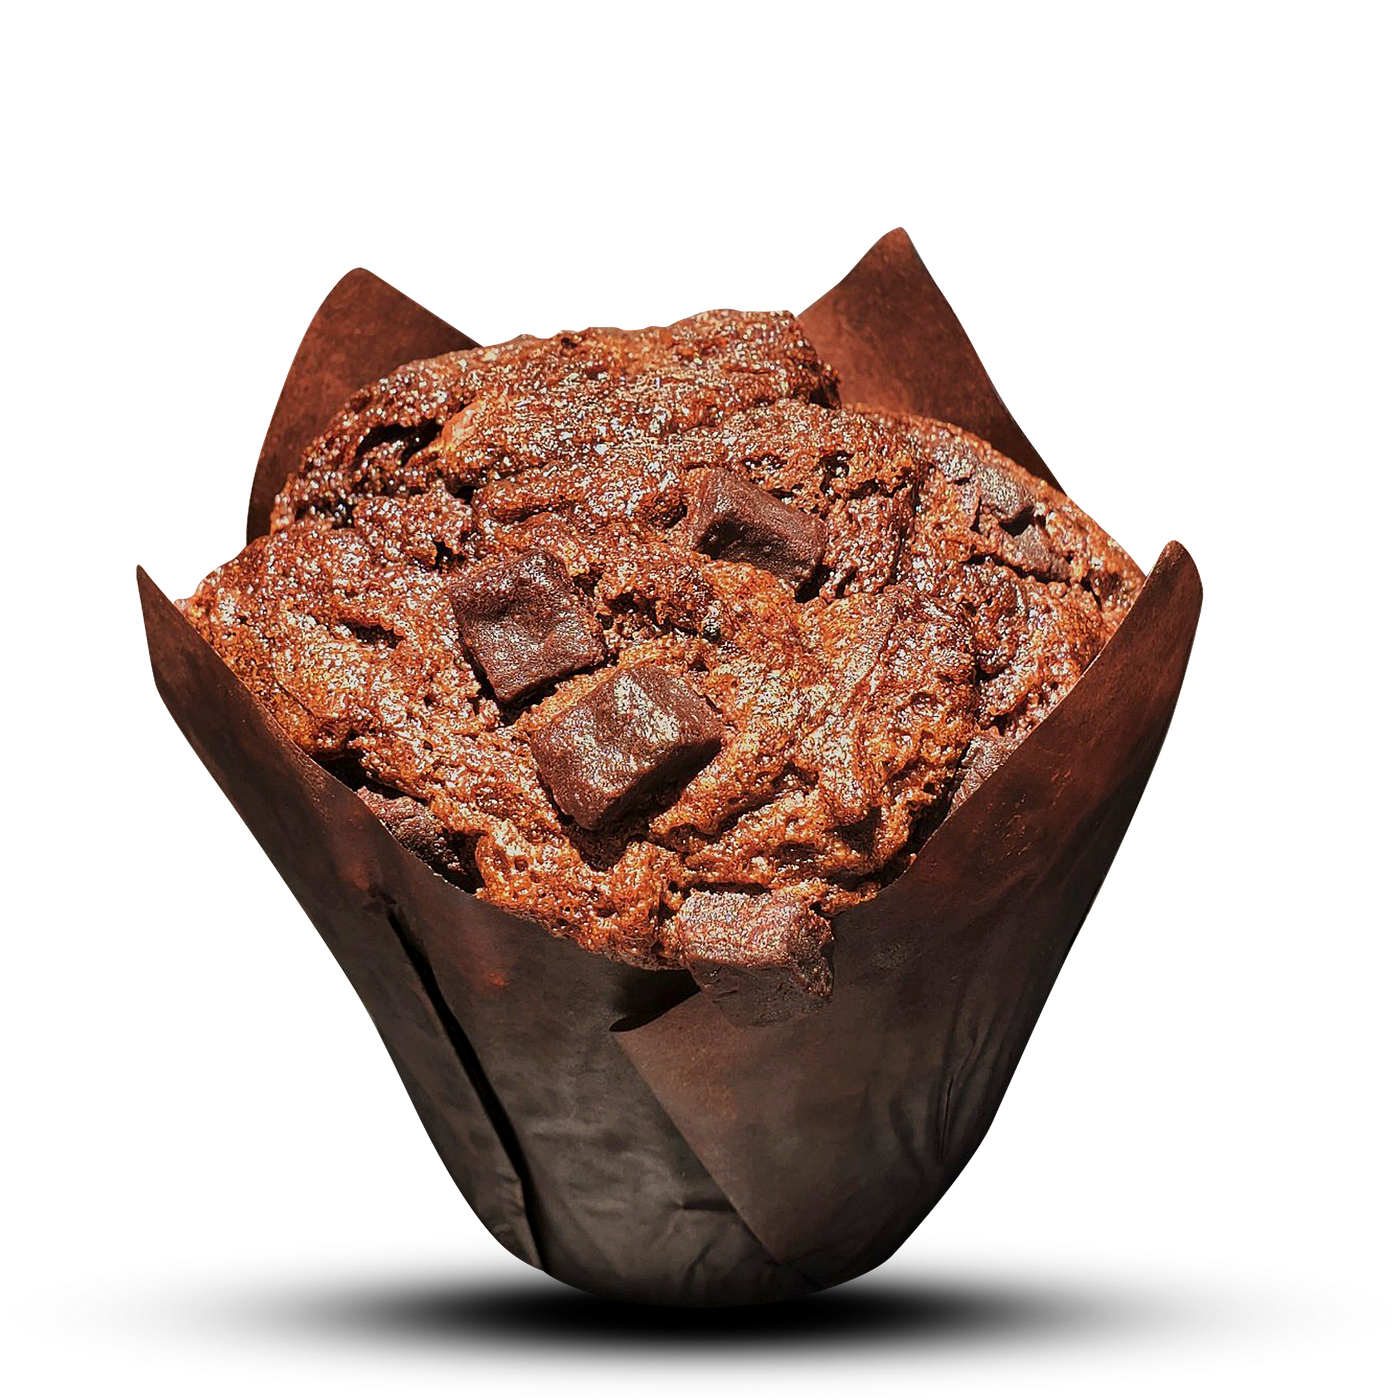 Chocolate Chunk Muffin